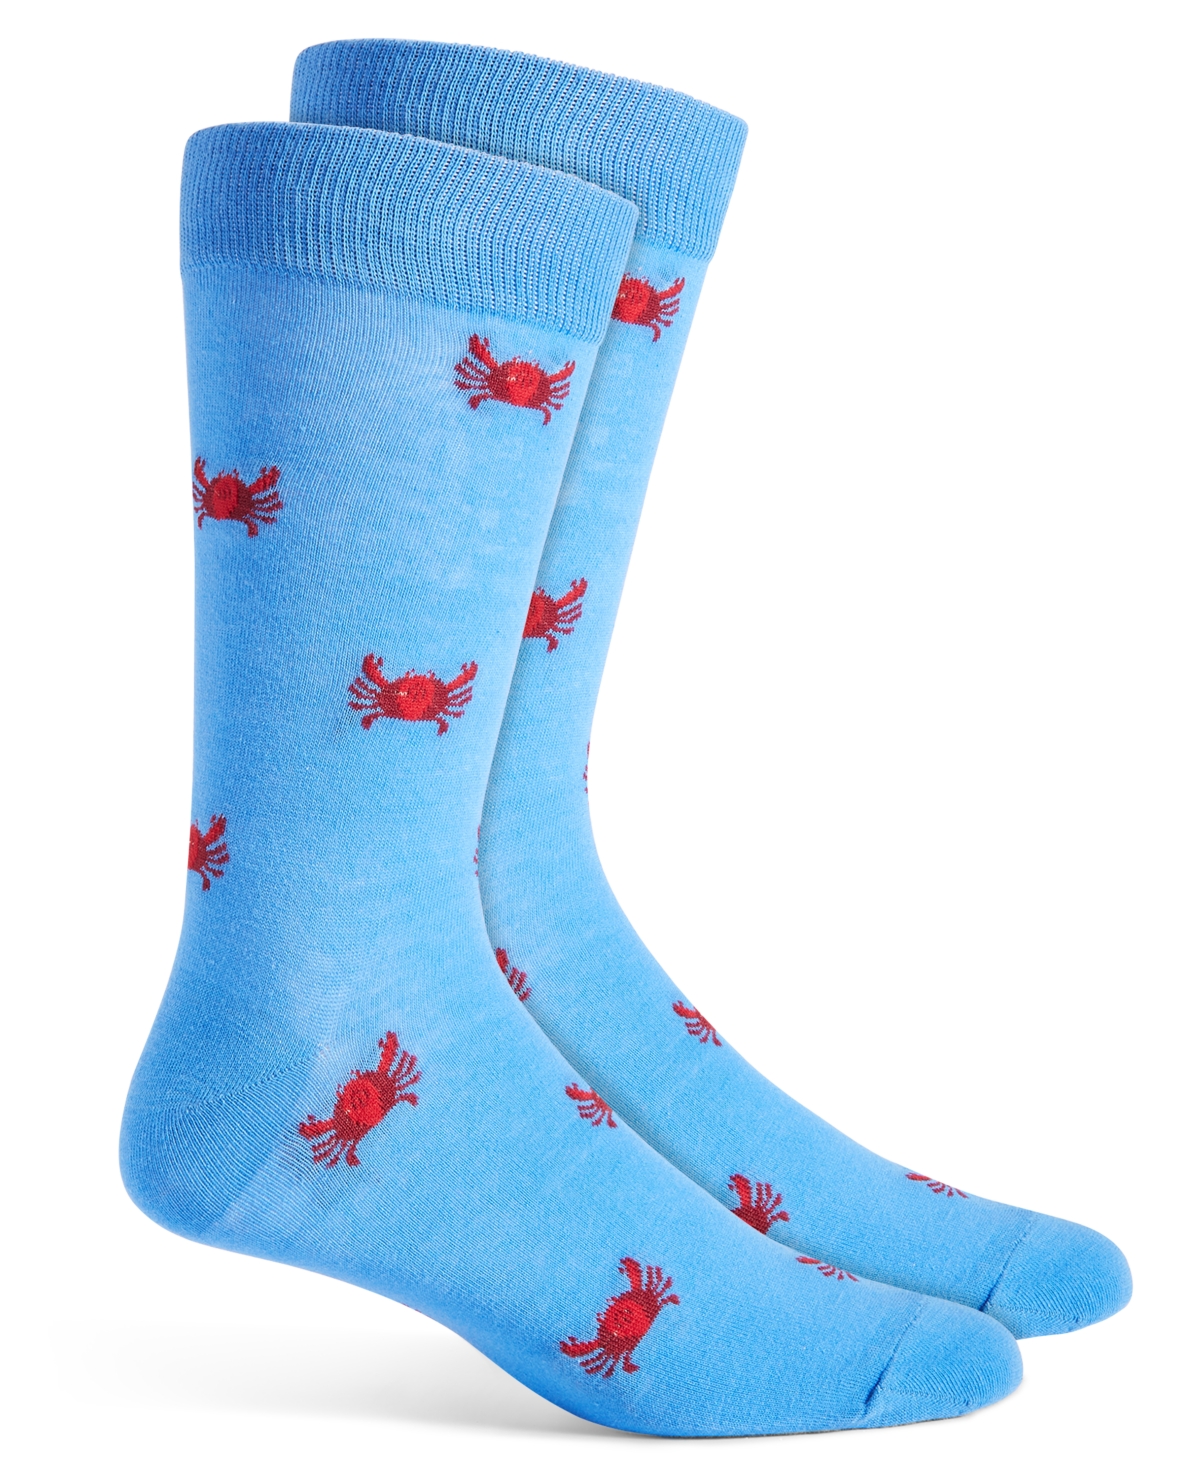 Men's Crab Crew Socks, Created for Macy's - Blue